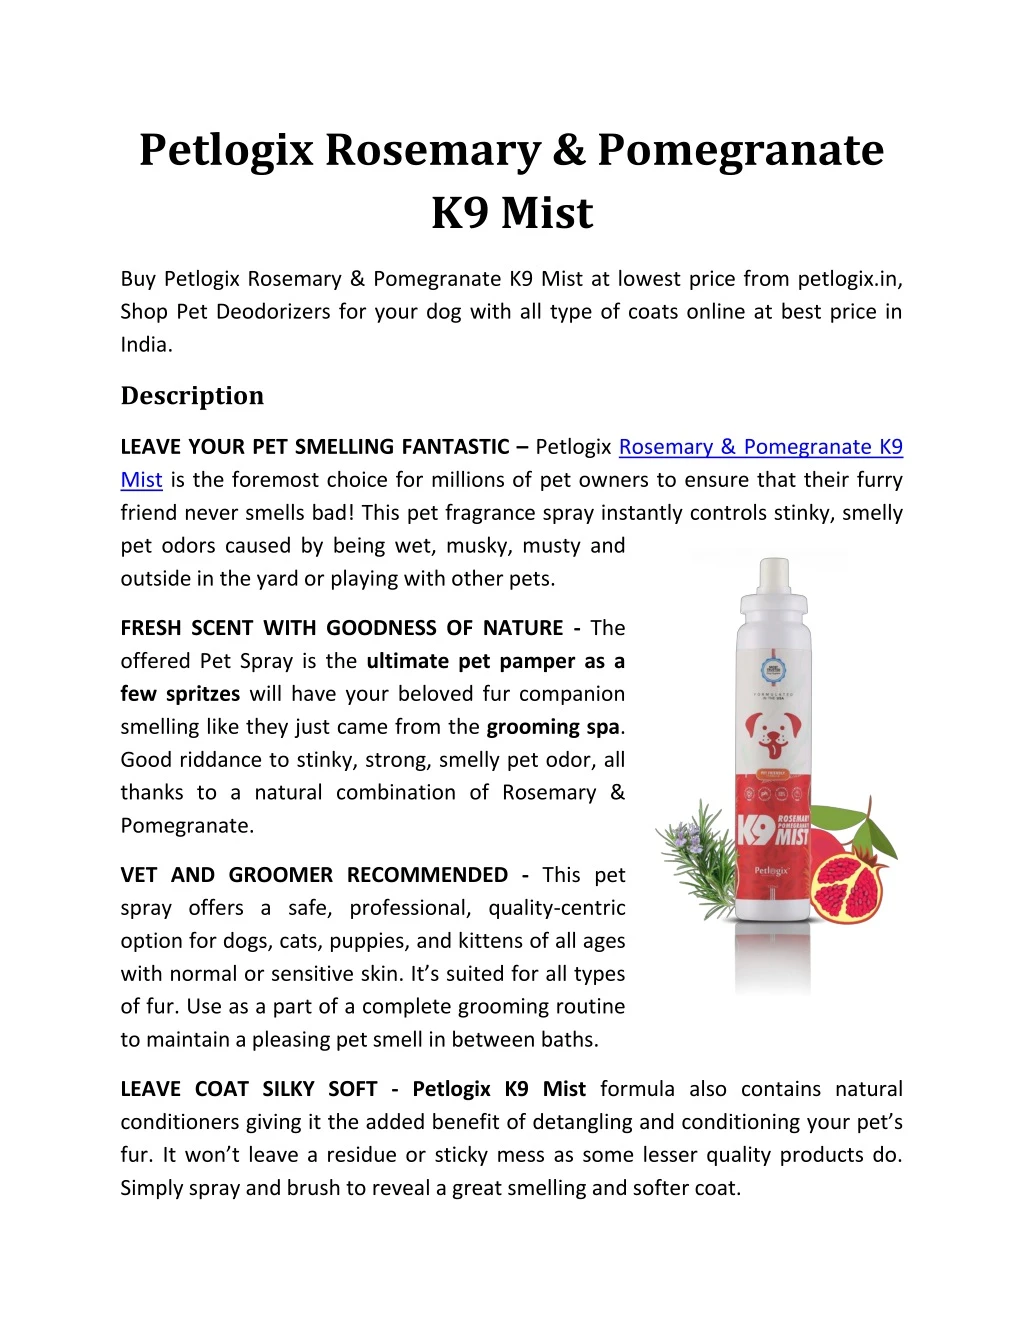 petlogix rosemary pomegranate k9 mist